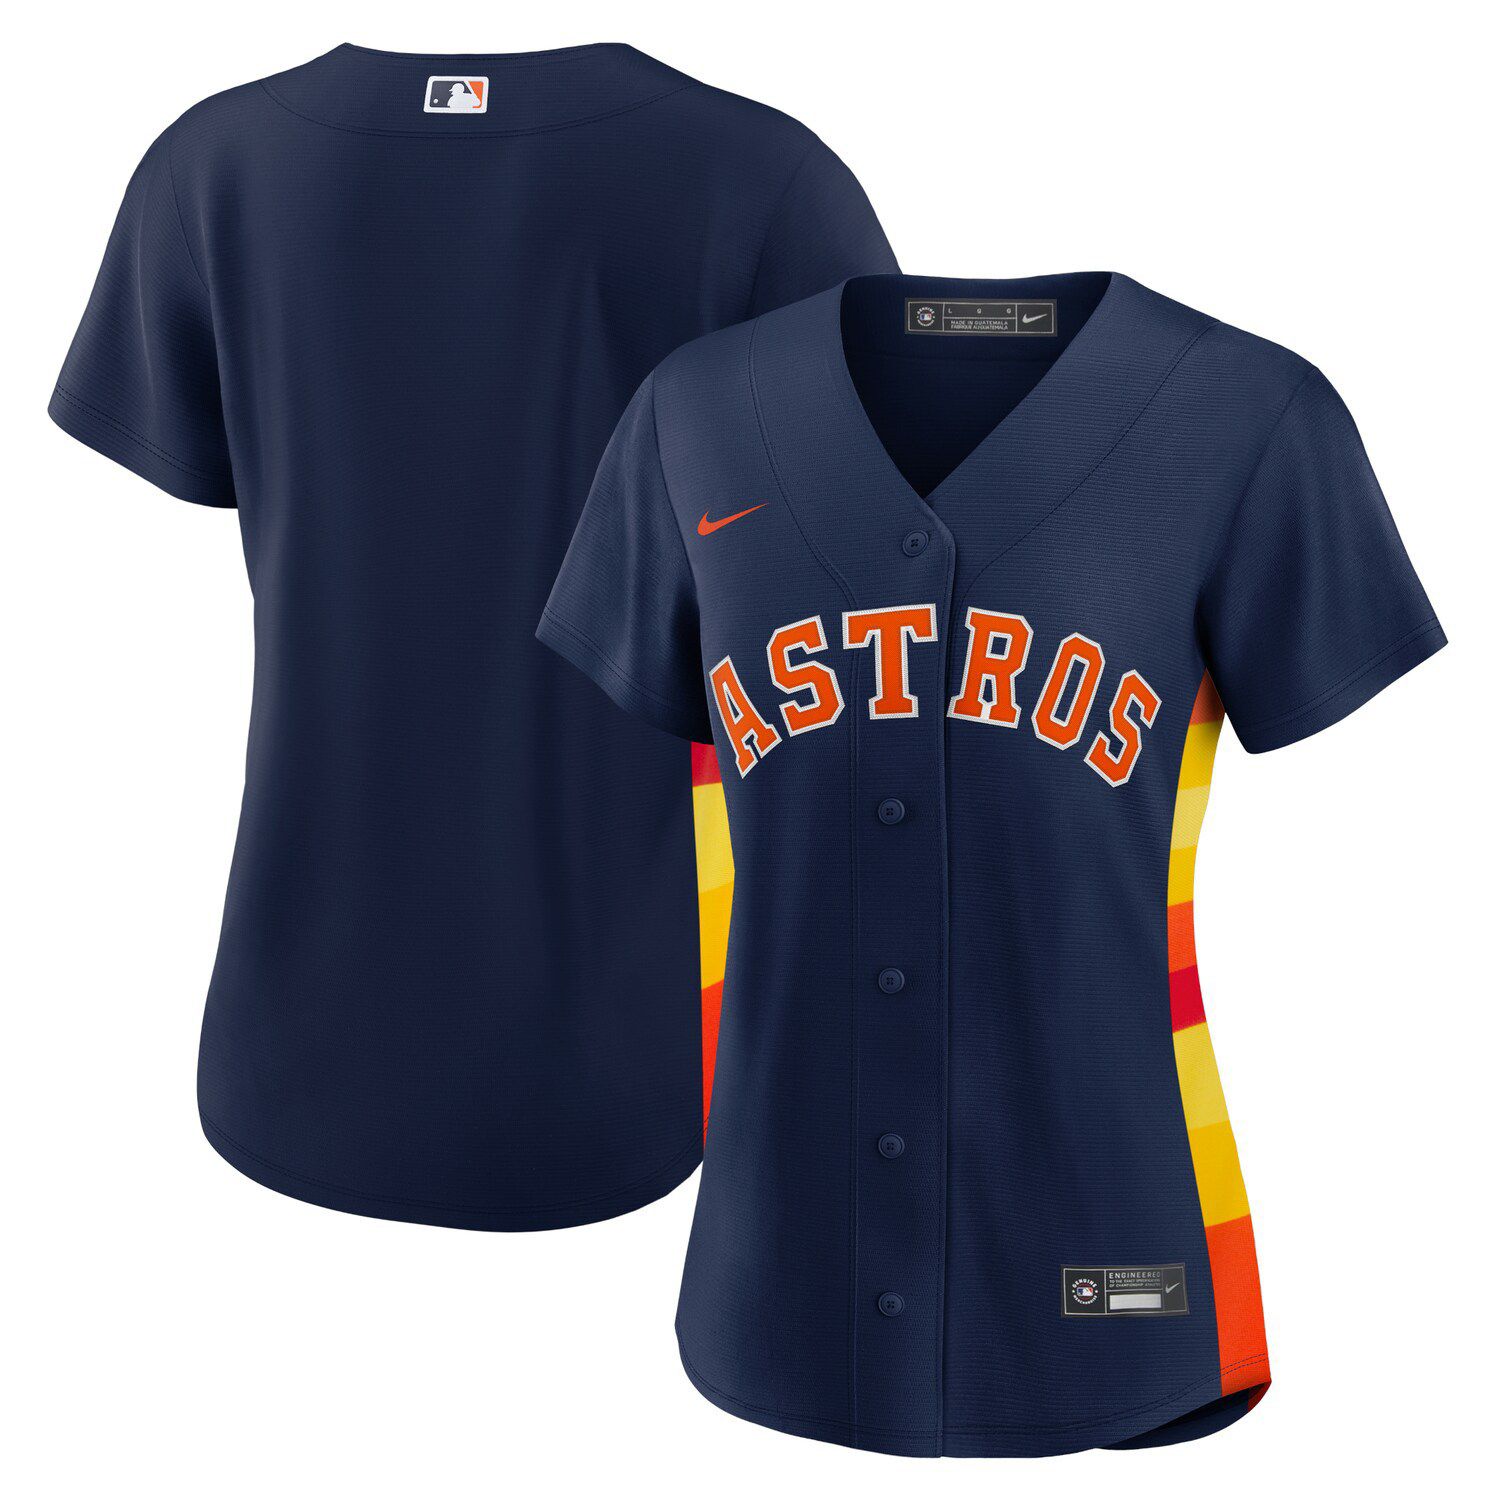 Houston Astros away jersey